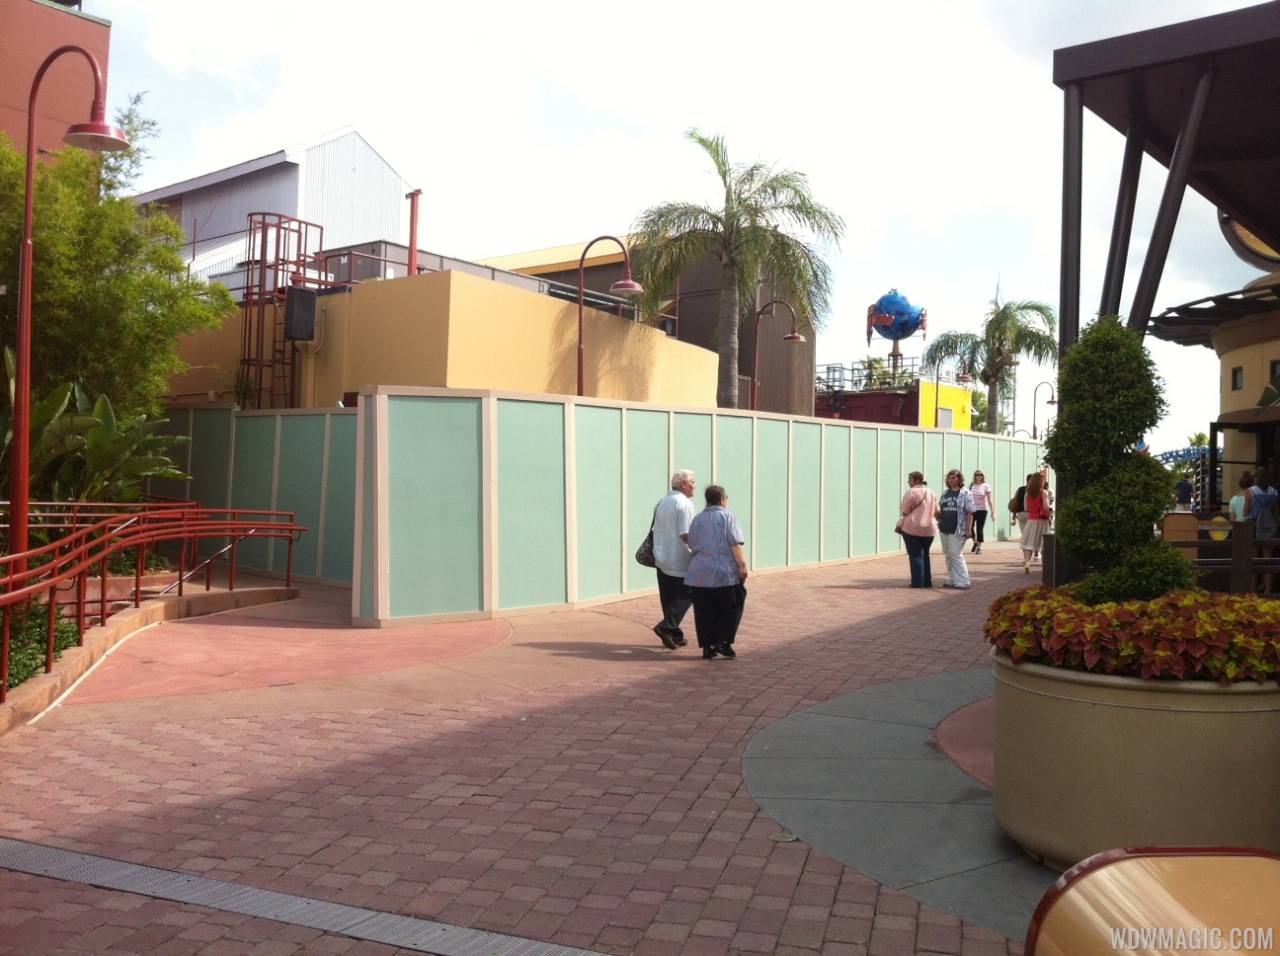 PHOTOS - More Disney Springs construction walls go up around Pleasure Island